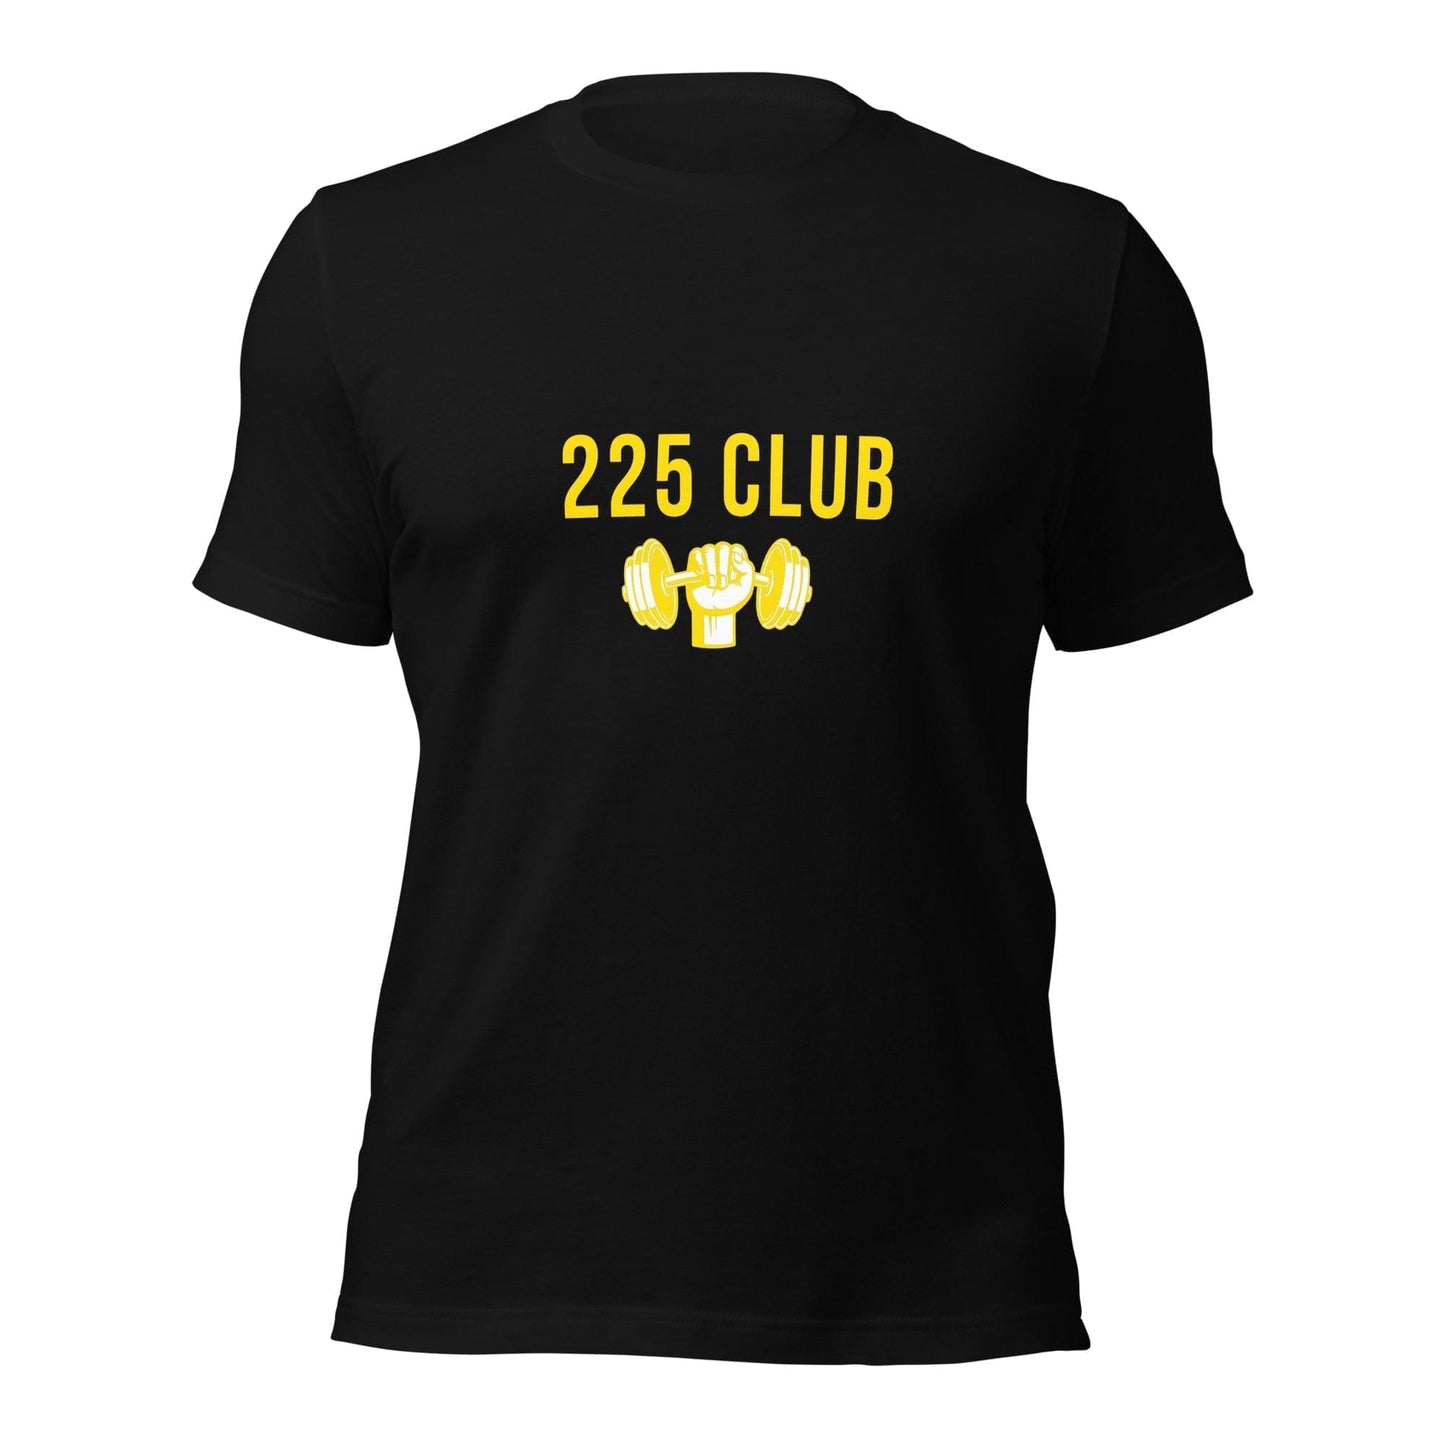 225 Club T-shirt